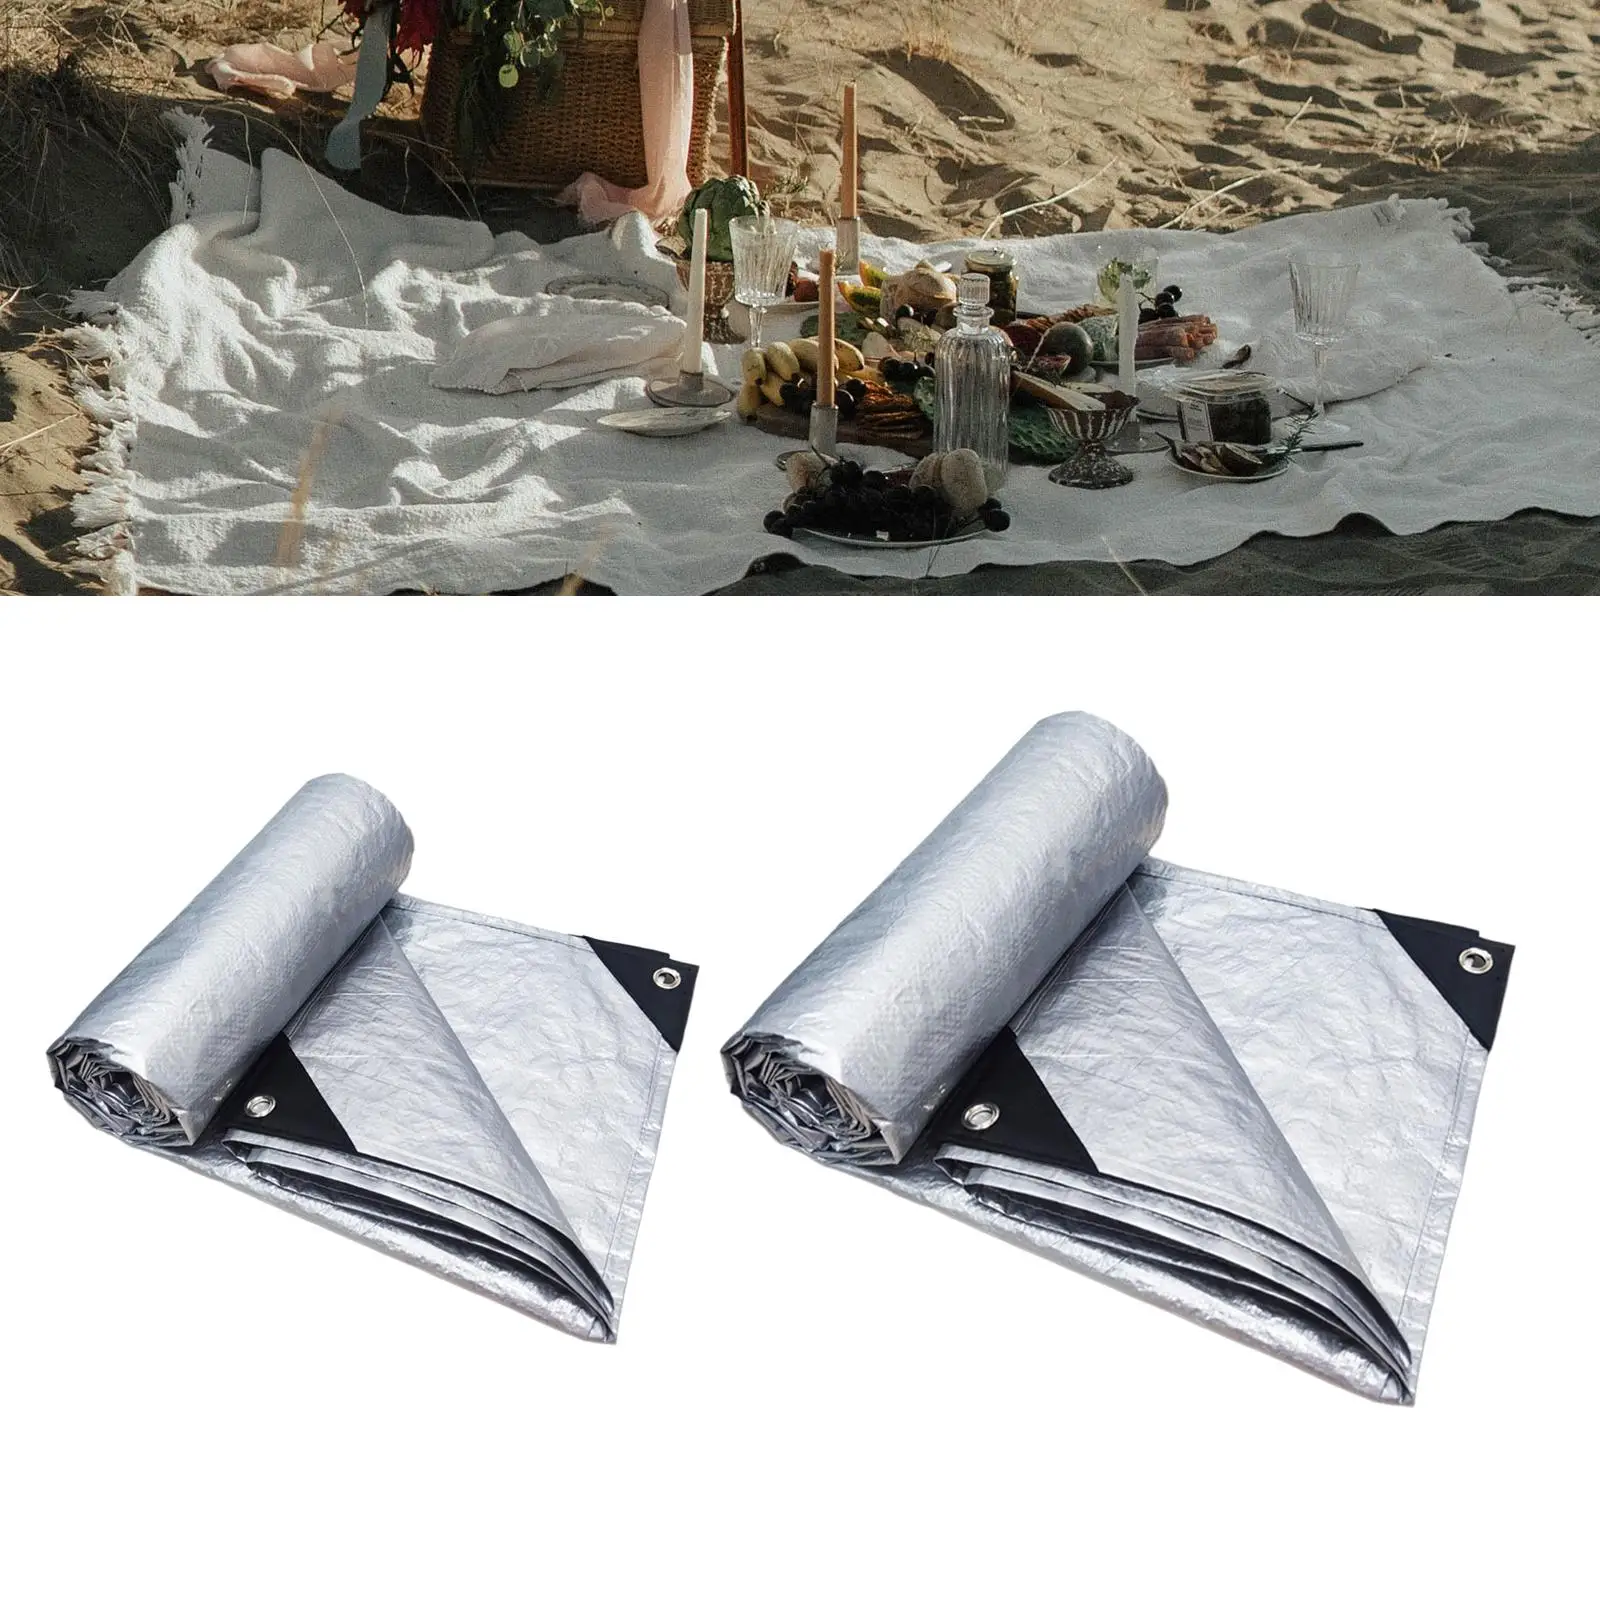 Picnic Outdoor Blanket Camping Blanket Rug Beach Mat for Activities, Beach, Grass